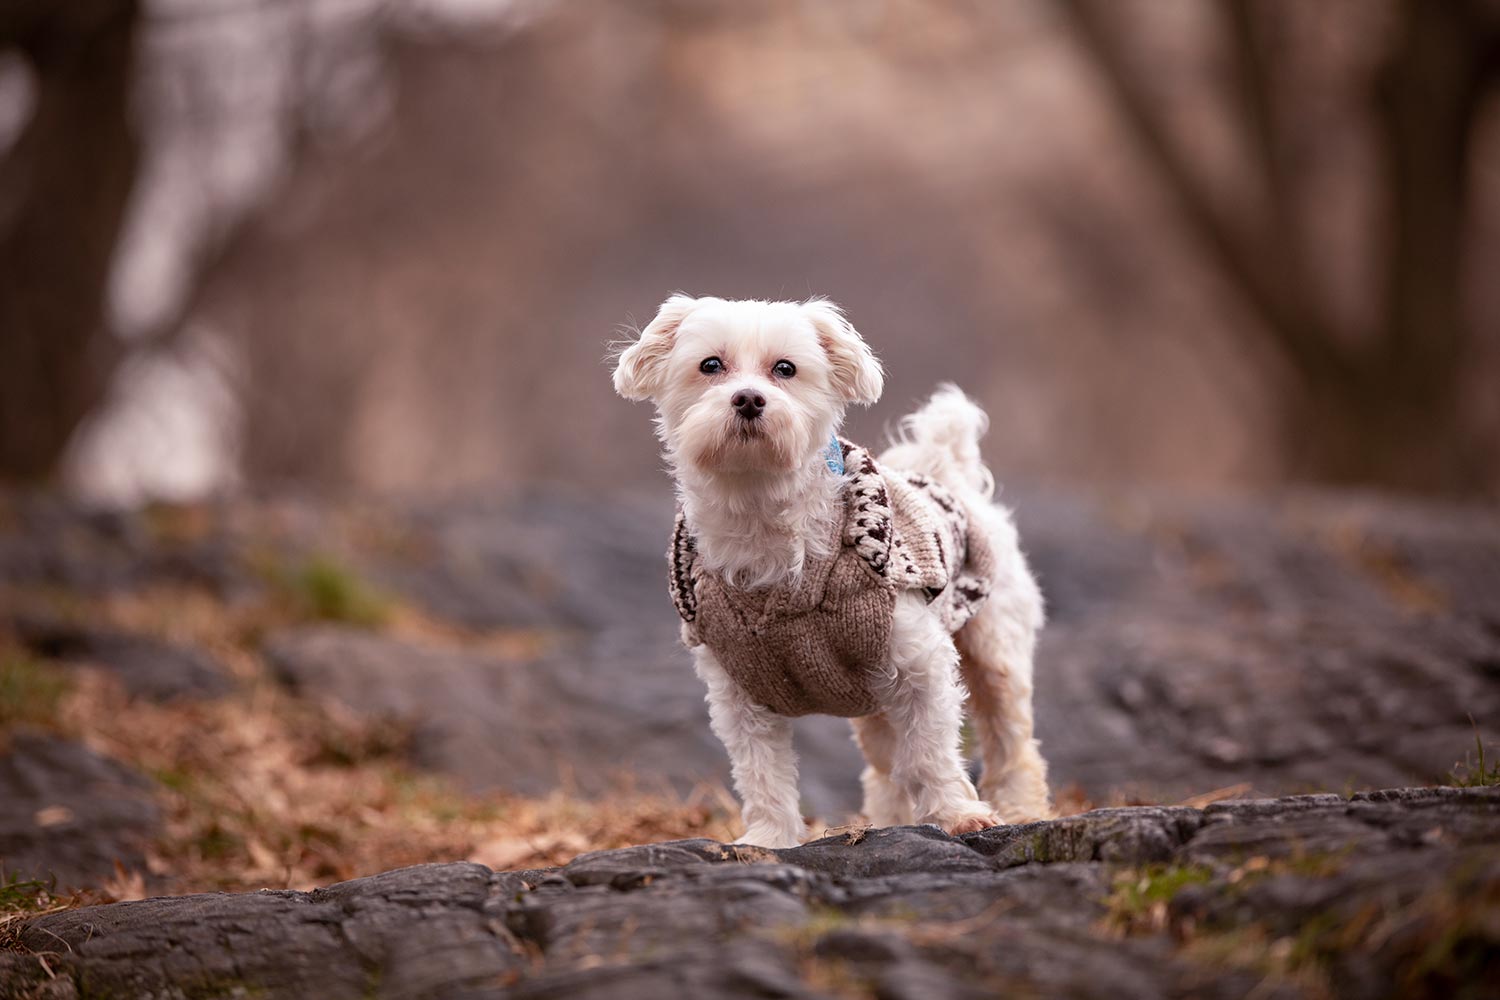 Wiley - NYC dog photographer